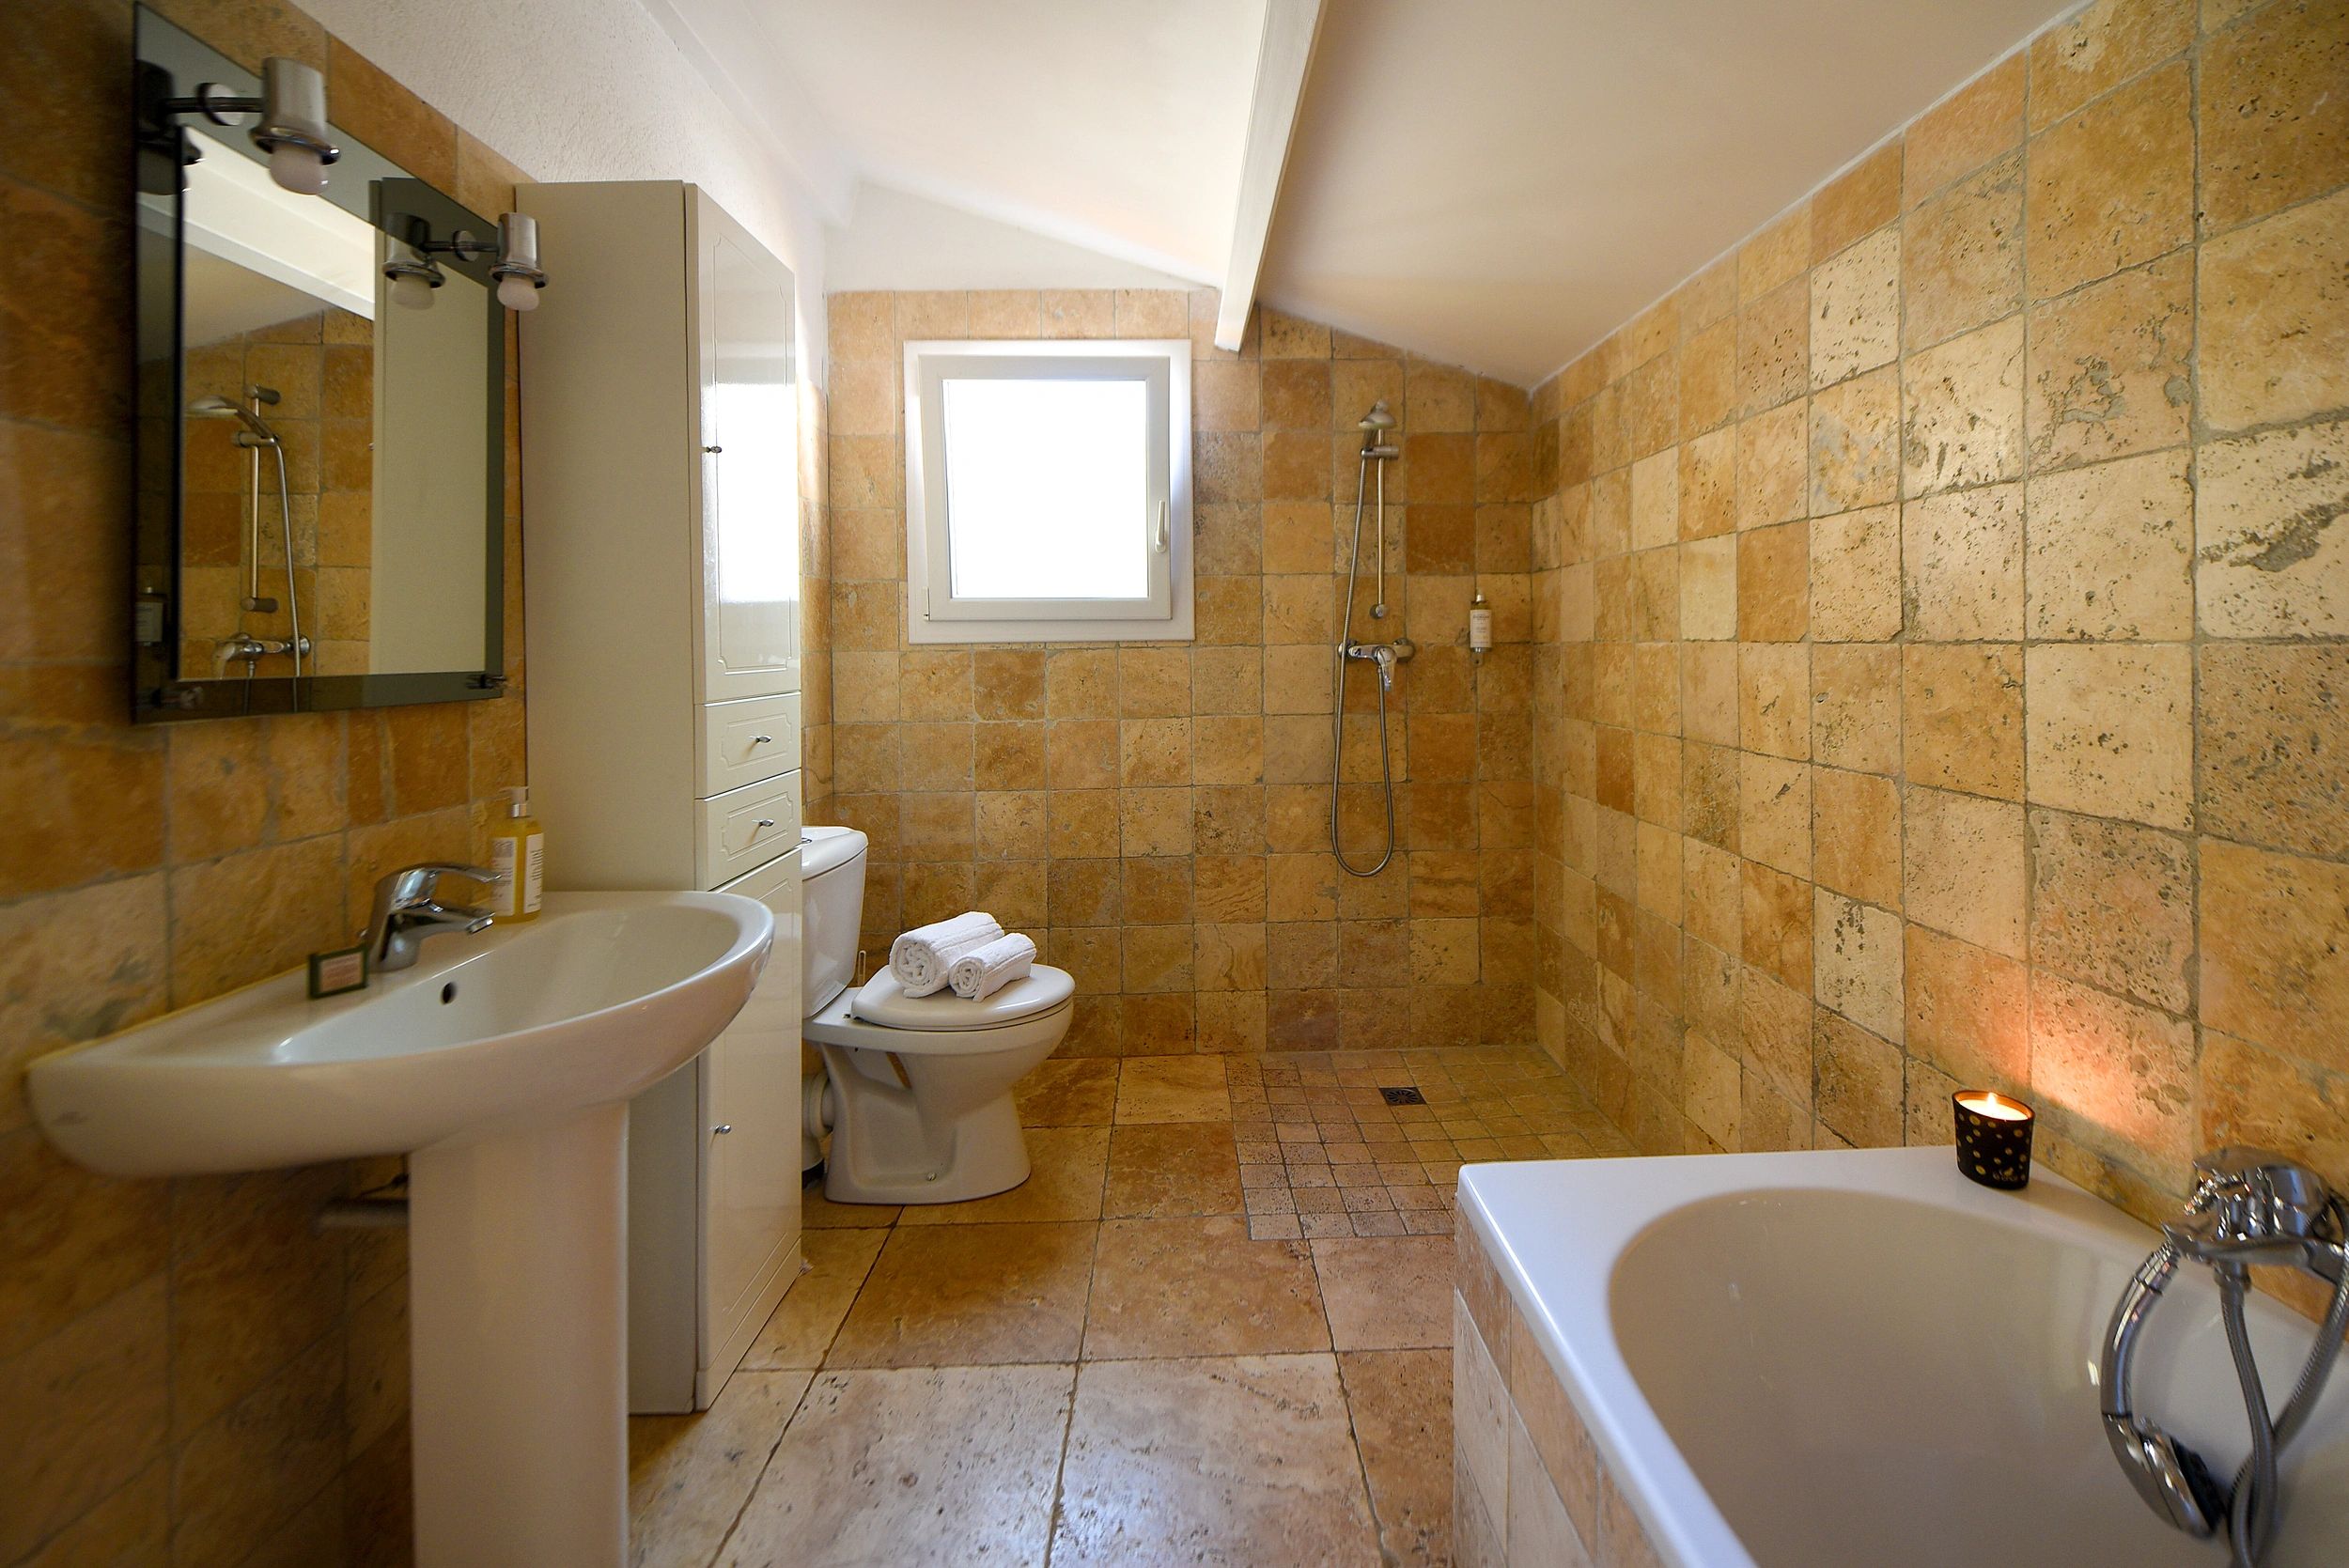 Large villa to rent in Porto-Vecchio with spacious bathroom